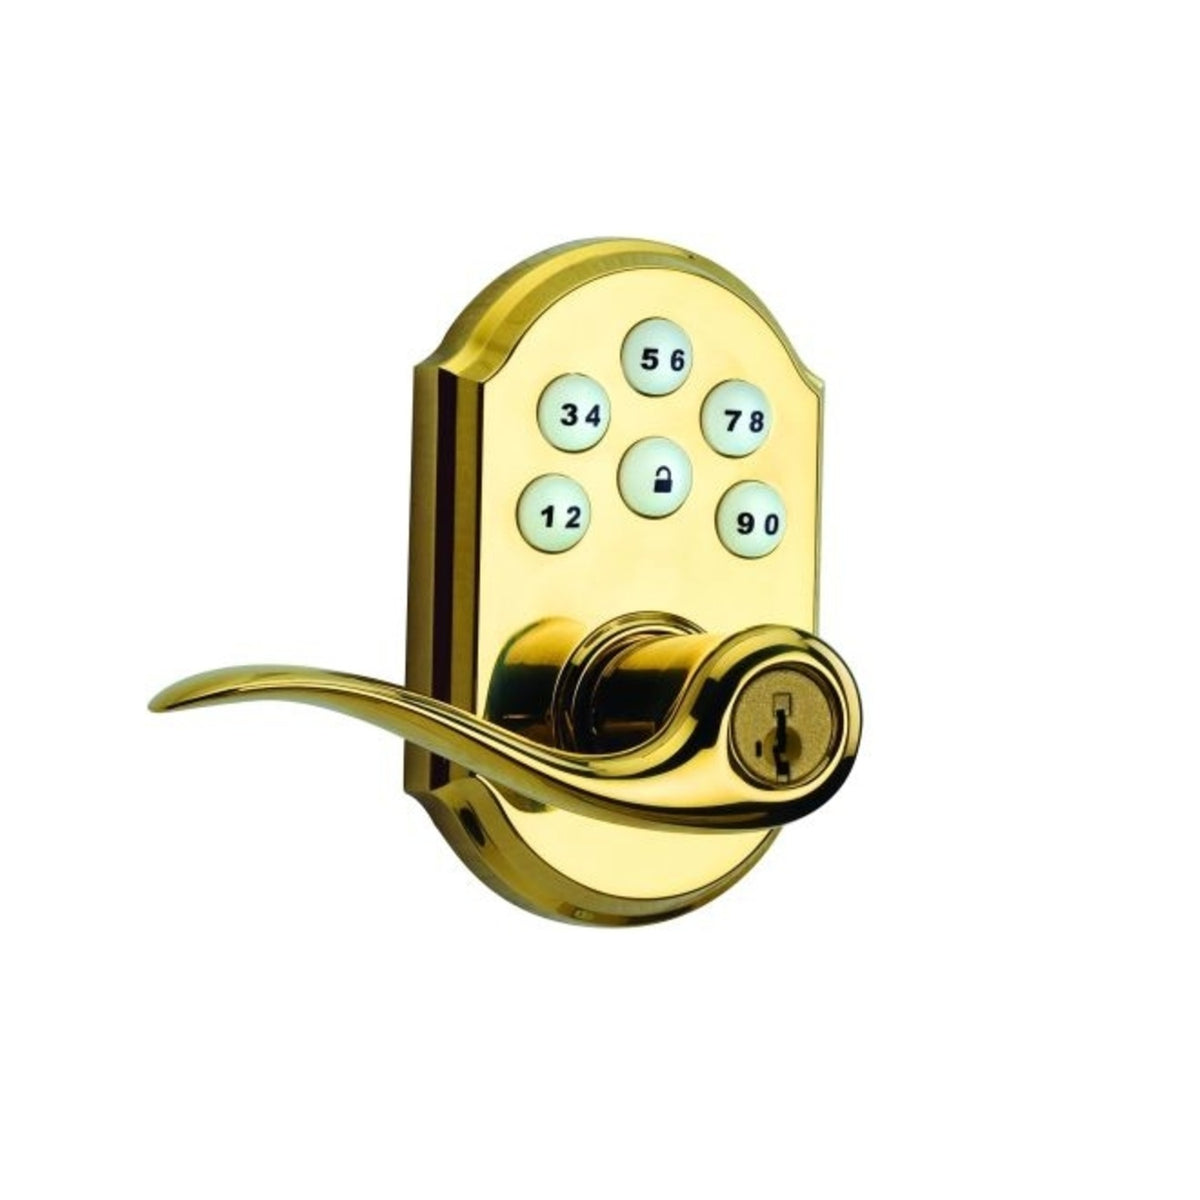 Weiser Lock GED1450TC3BRS Smartcode Electronic Deadbolt With Smart Key, Lifetime Bright Brass